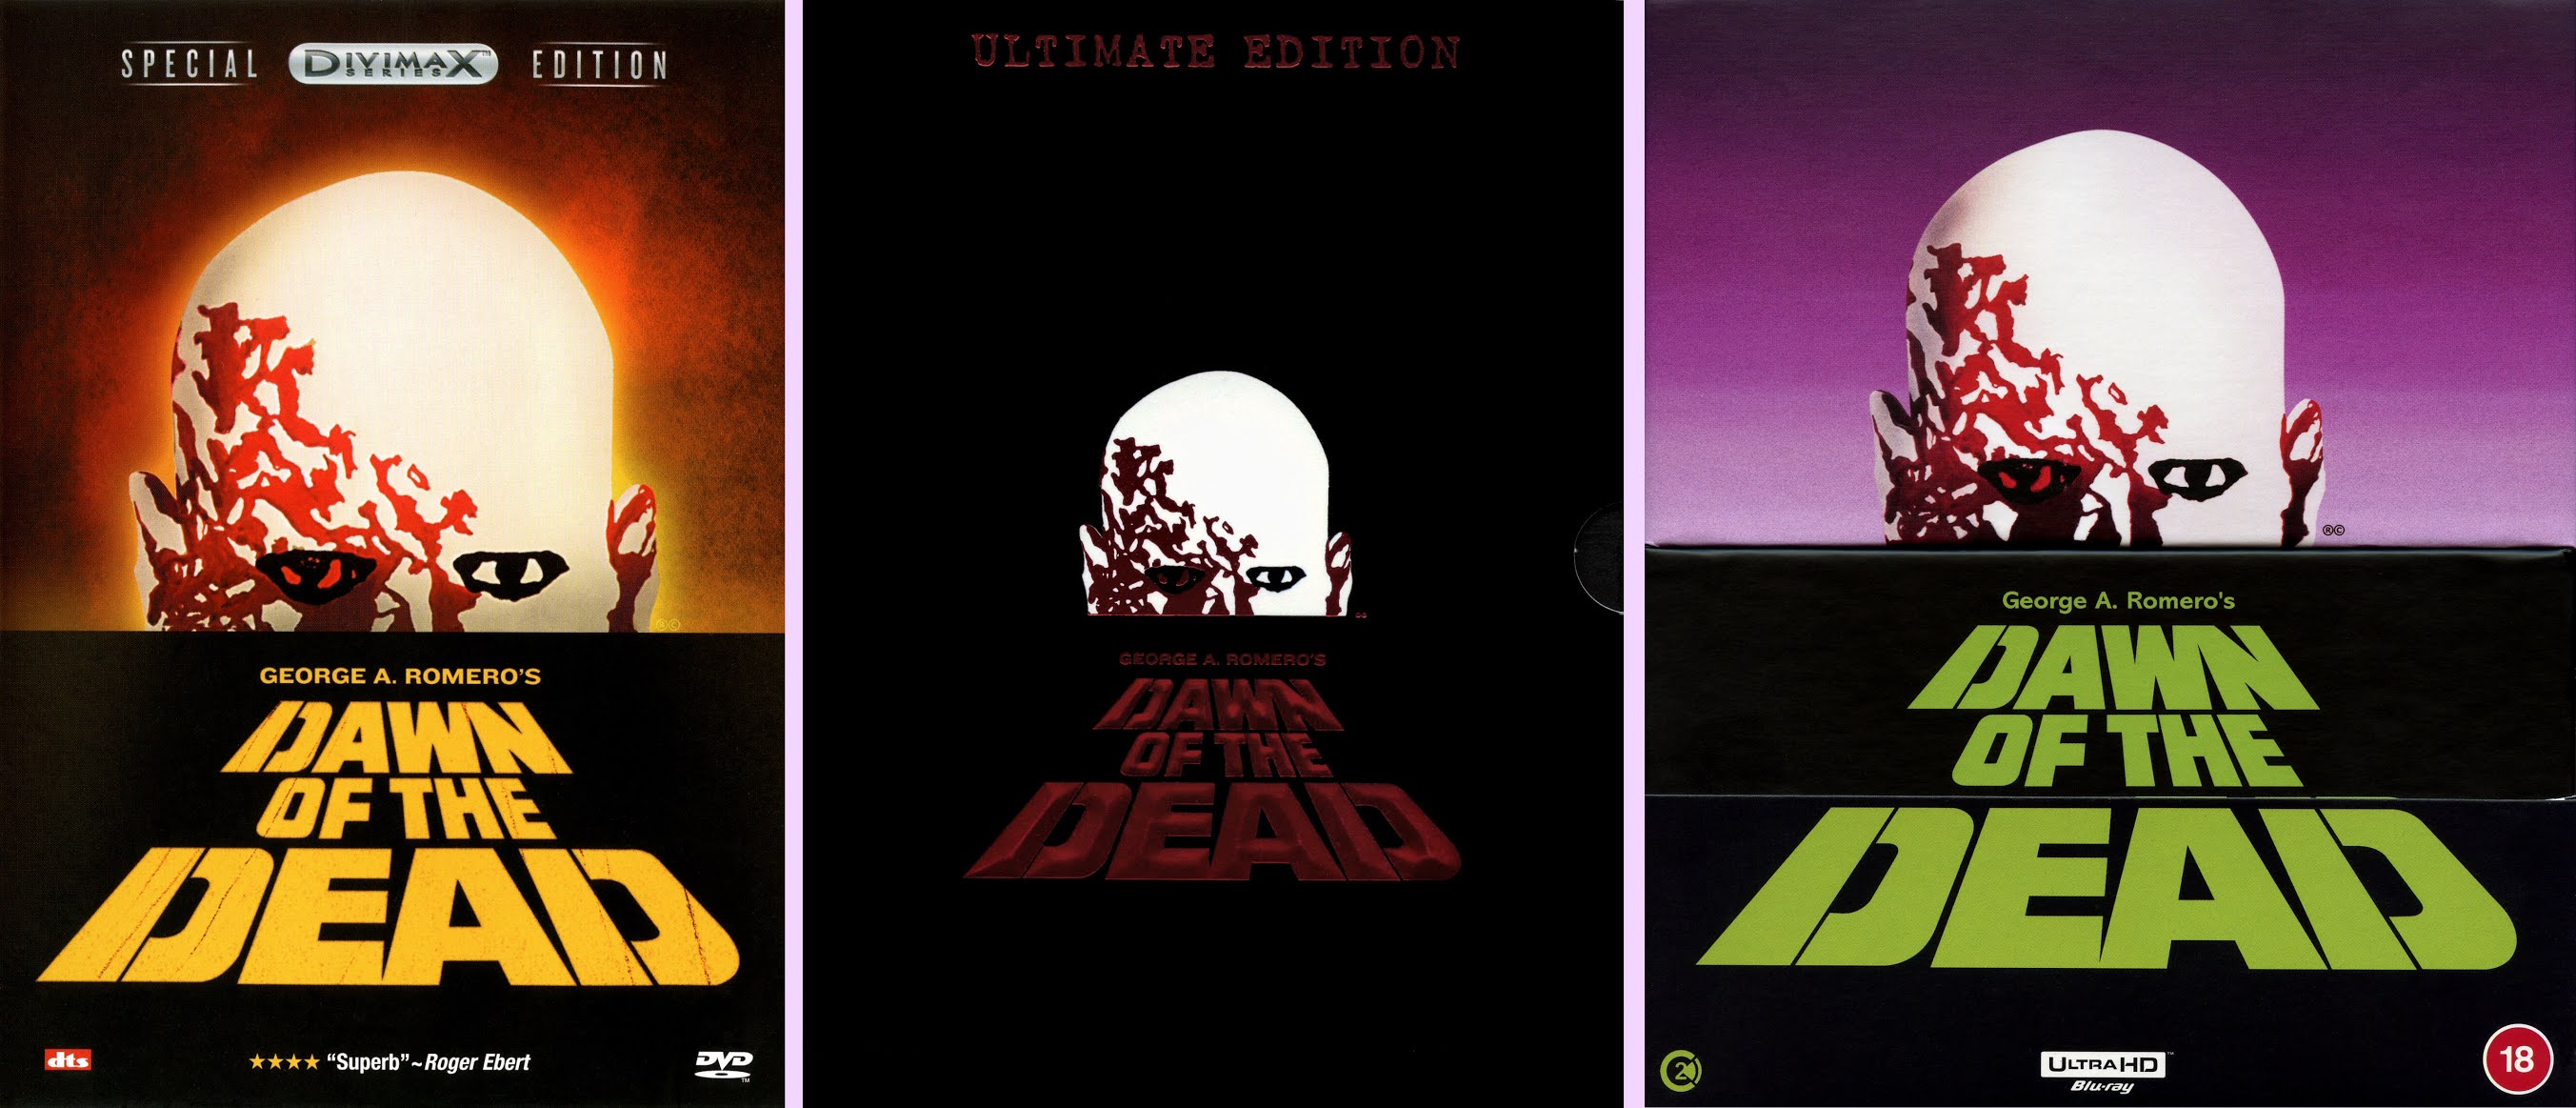 72 - Dawn of the Dead (1978) - George Romero, The Walking Dead